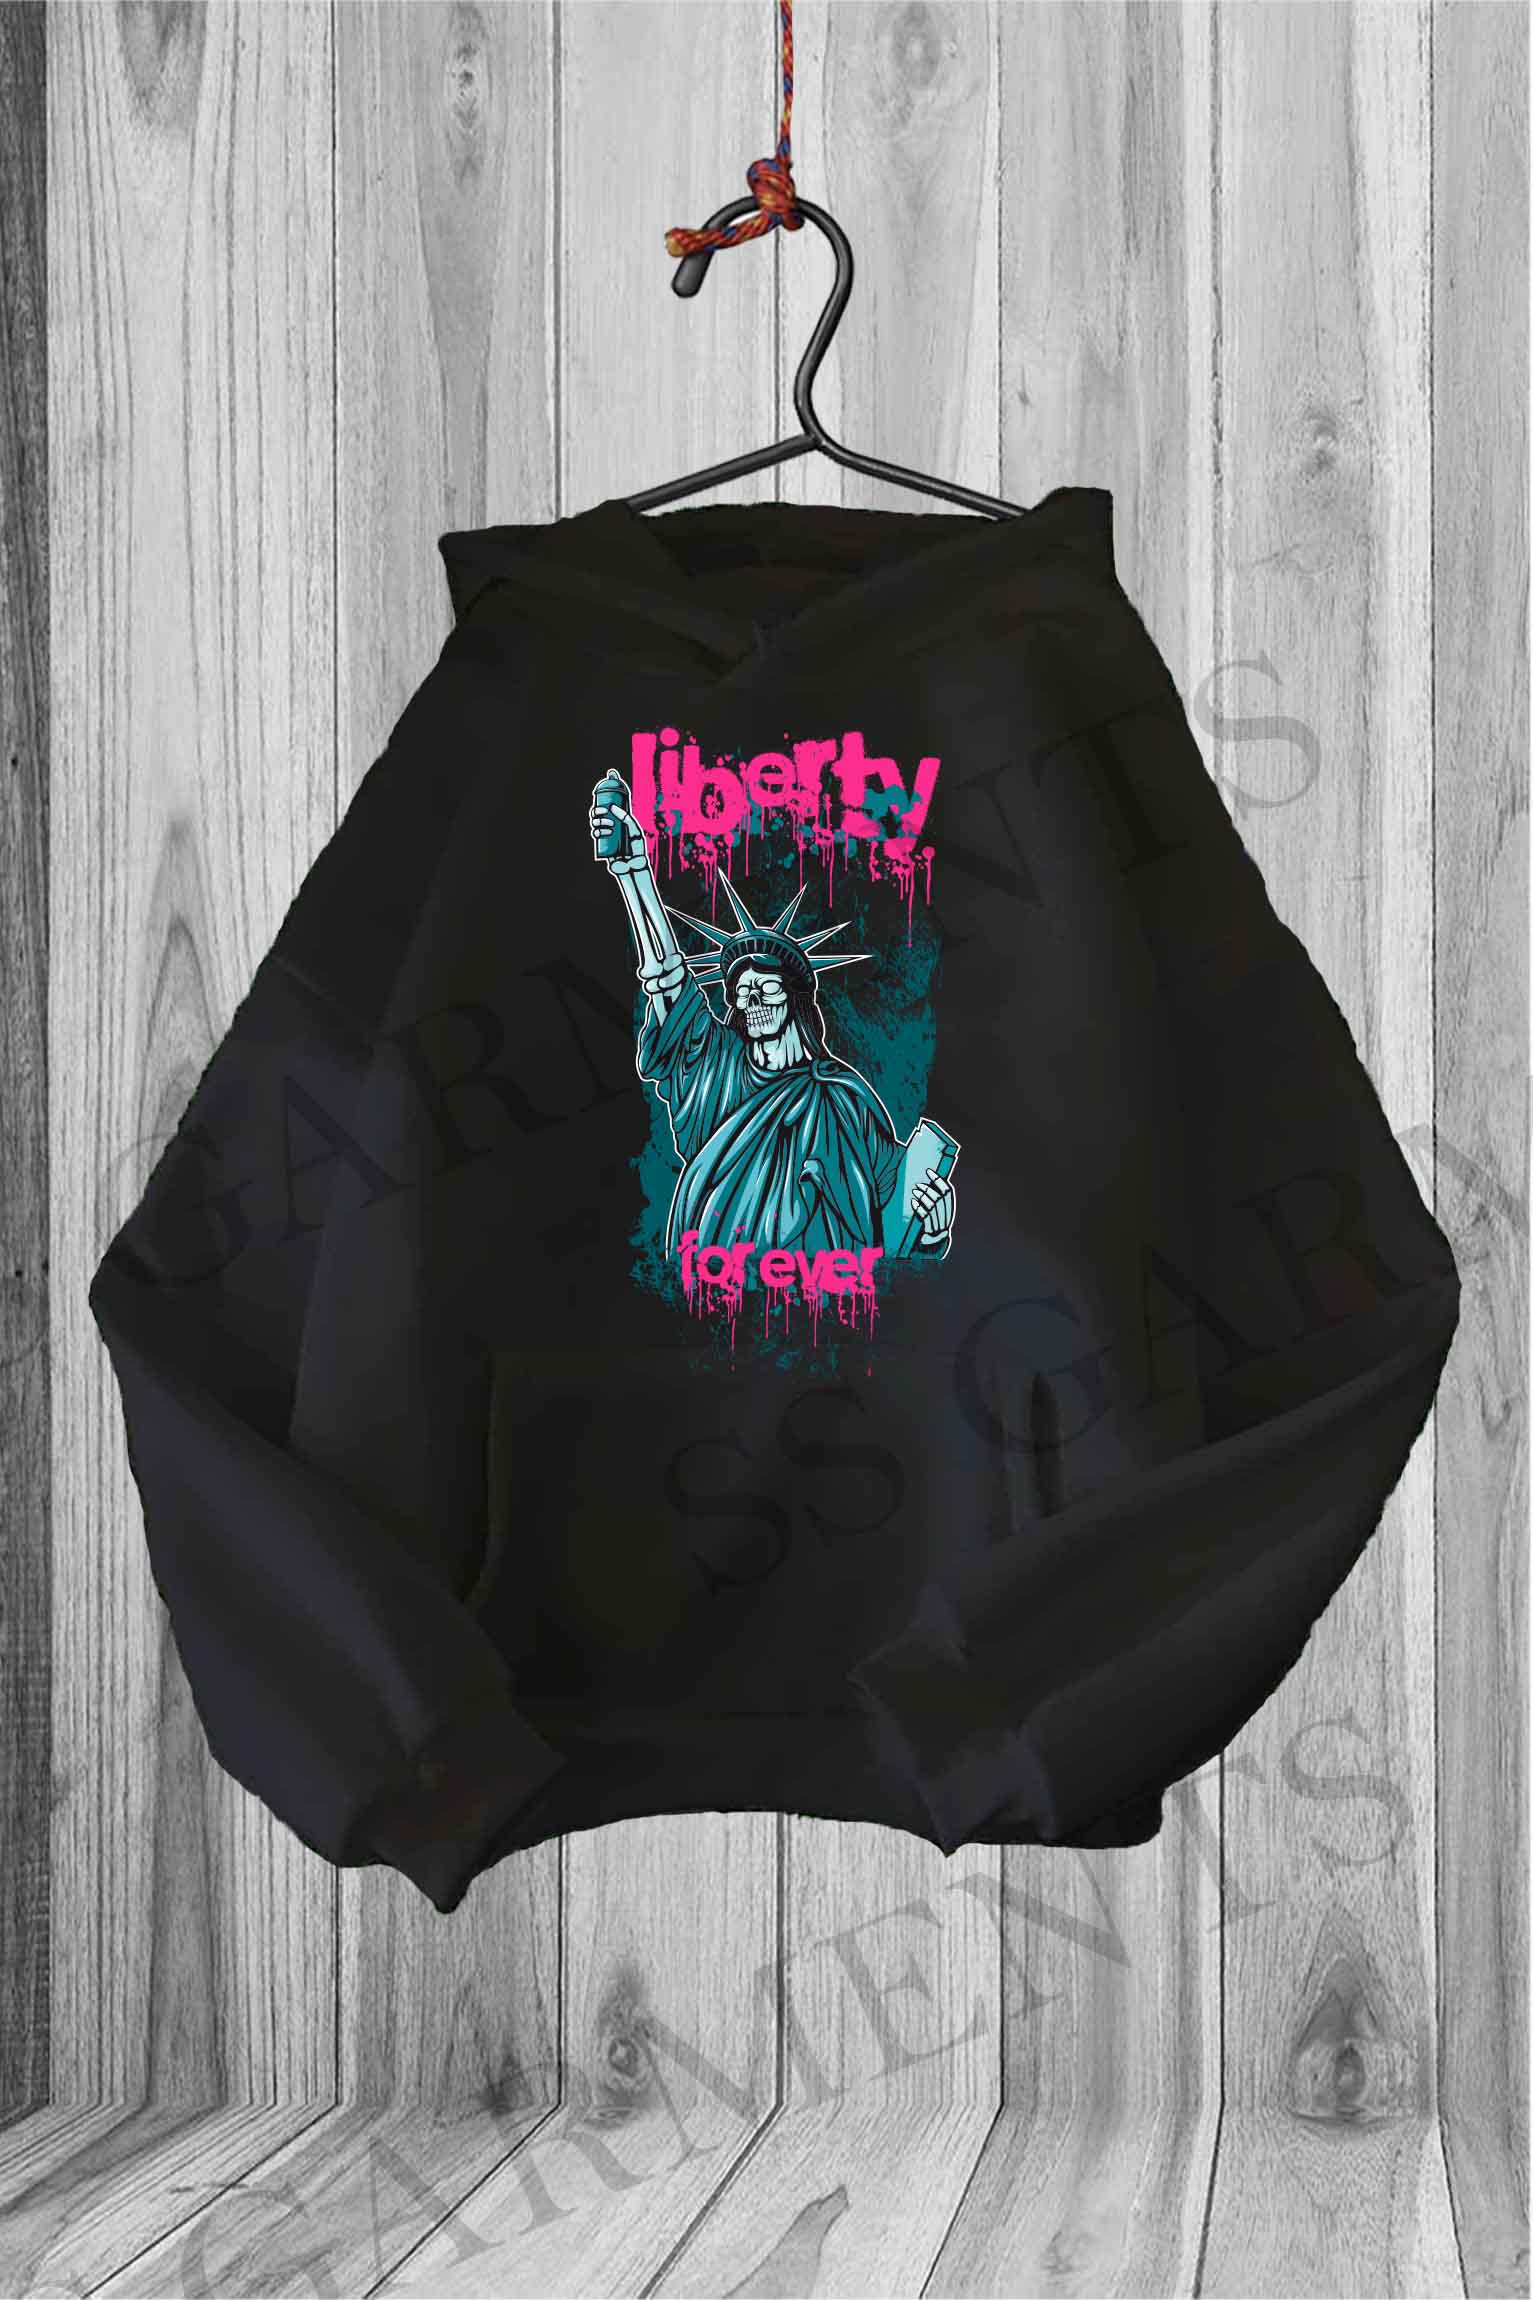 Liberty Forever Printed hoodies for men